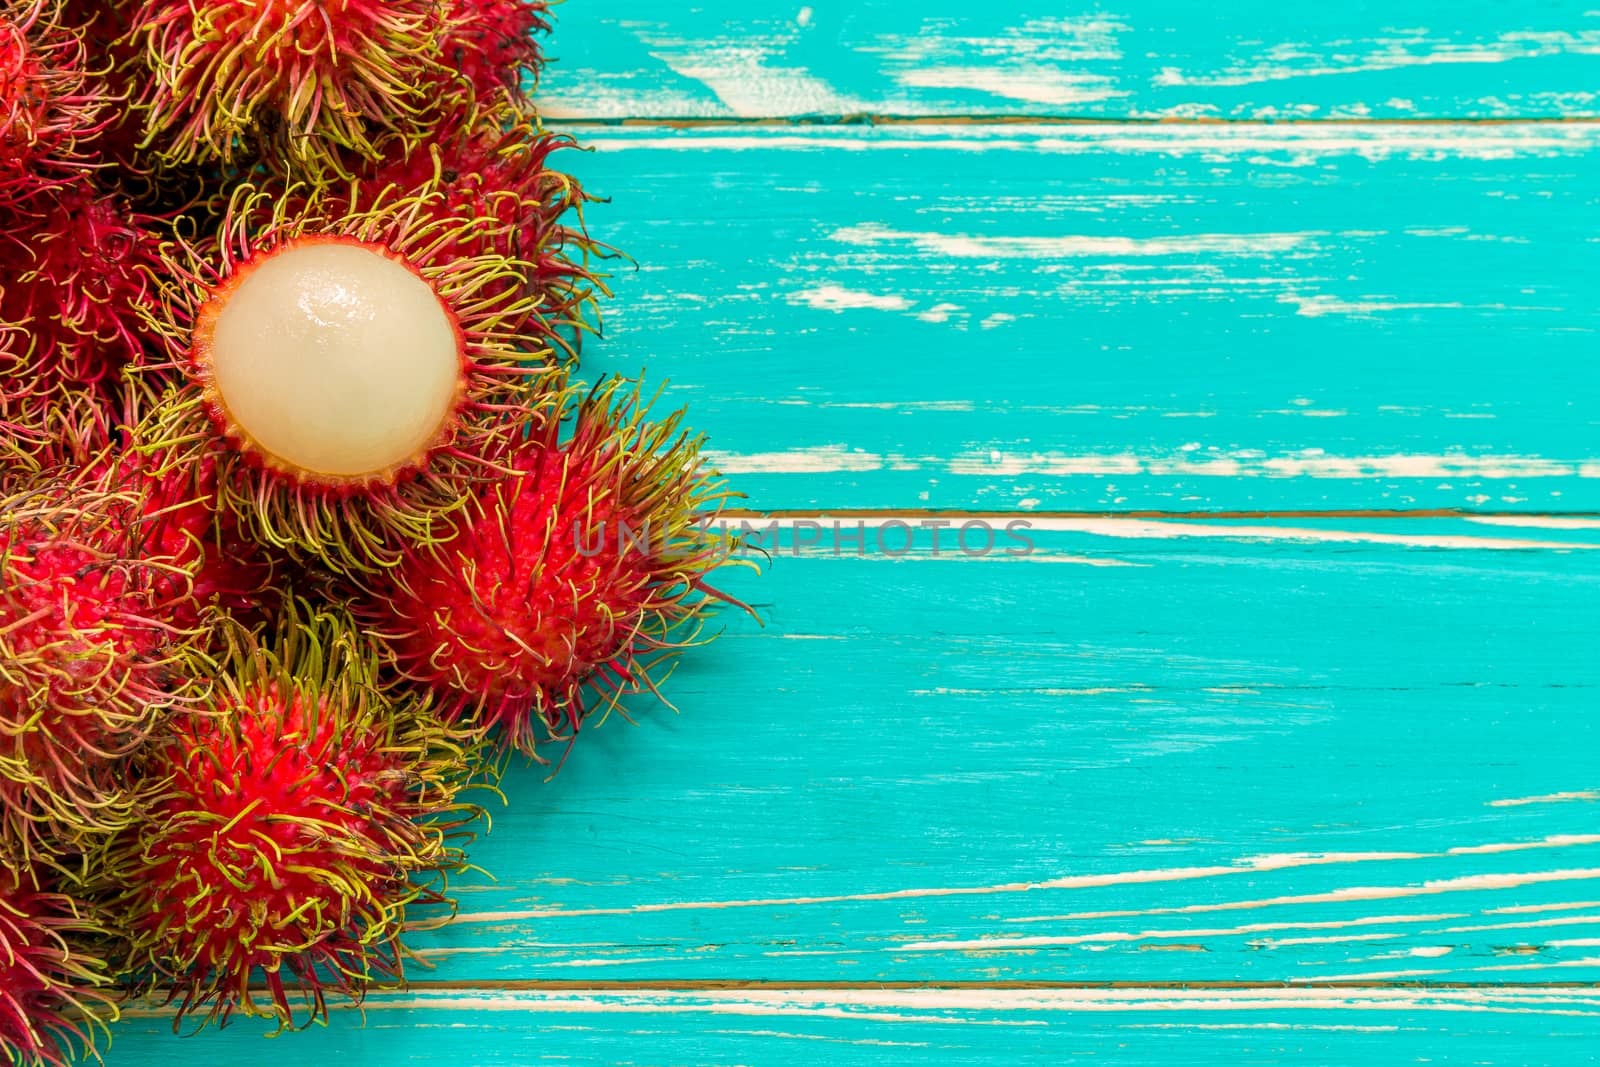 Rambutan, tropical fruit, common fruit in Southeast Asia countries.